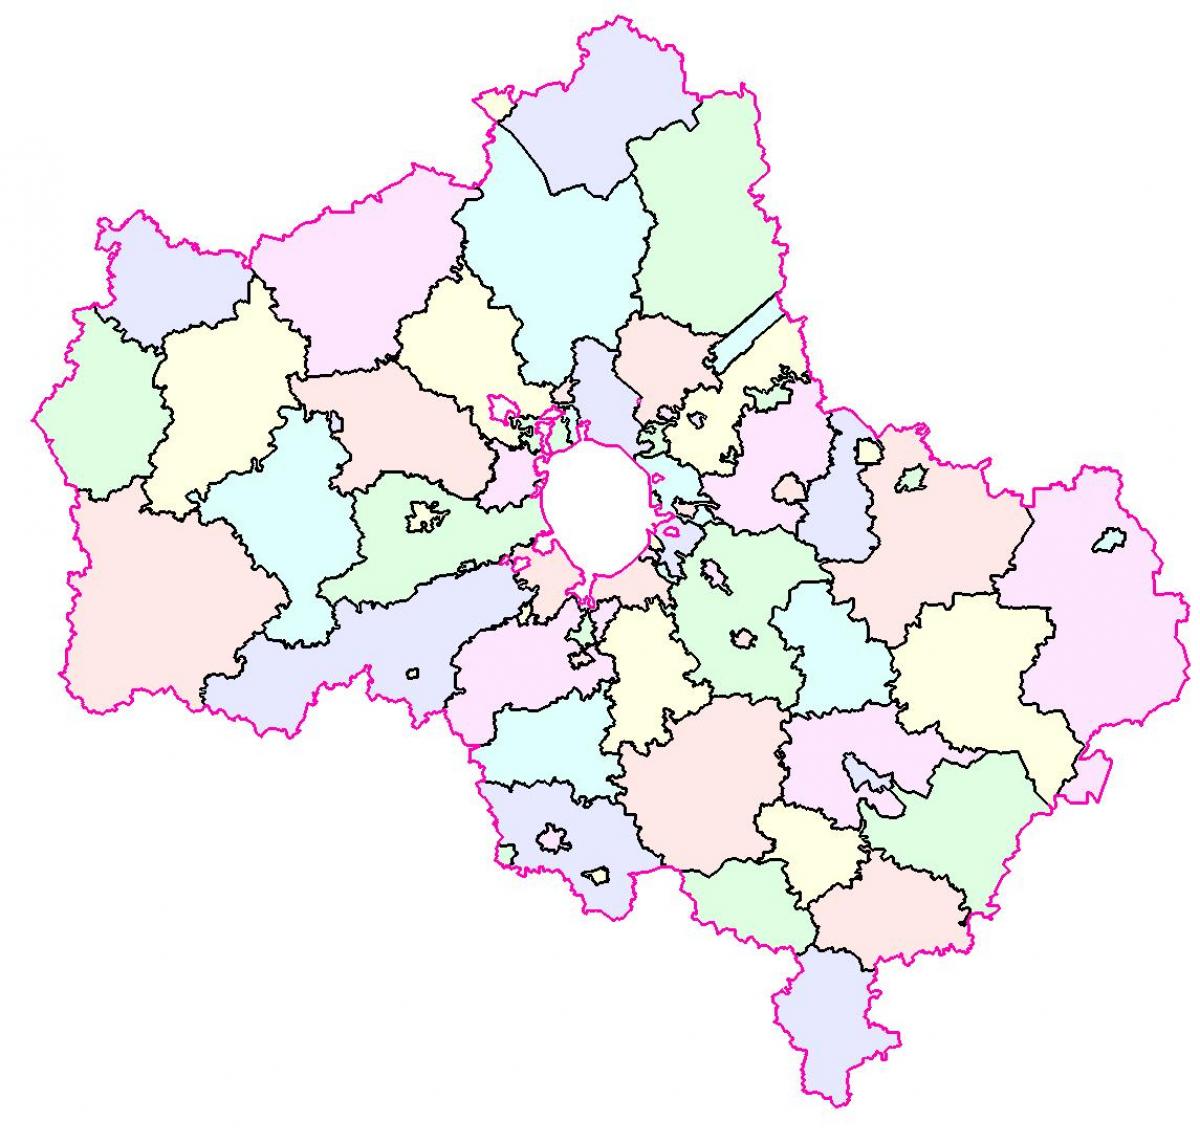 Moskva Karte der region